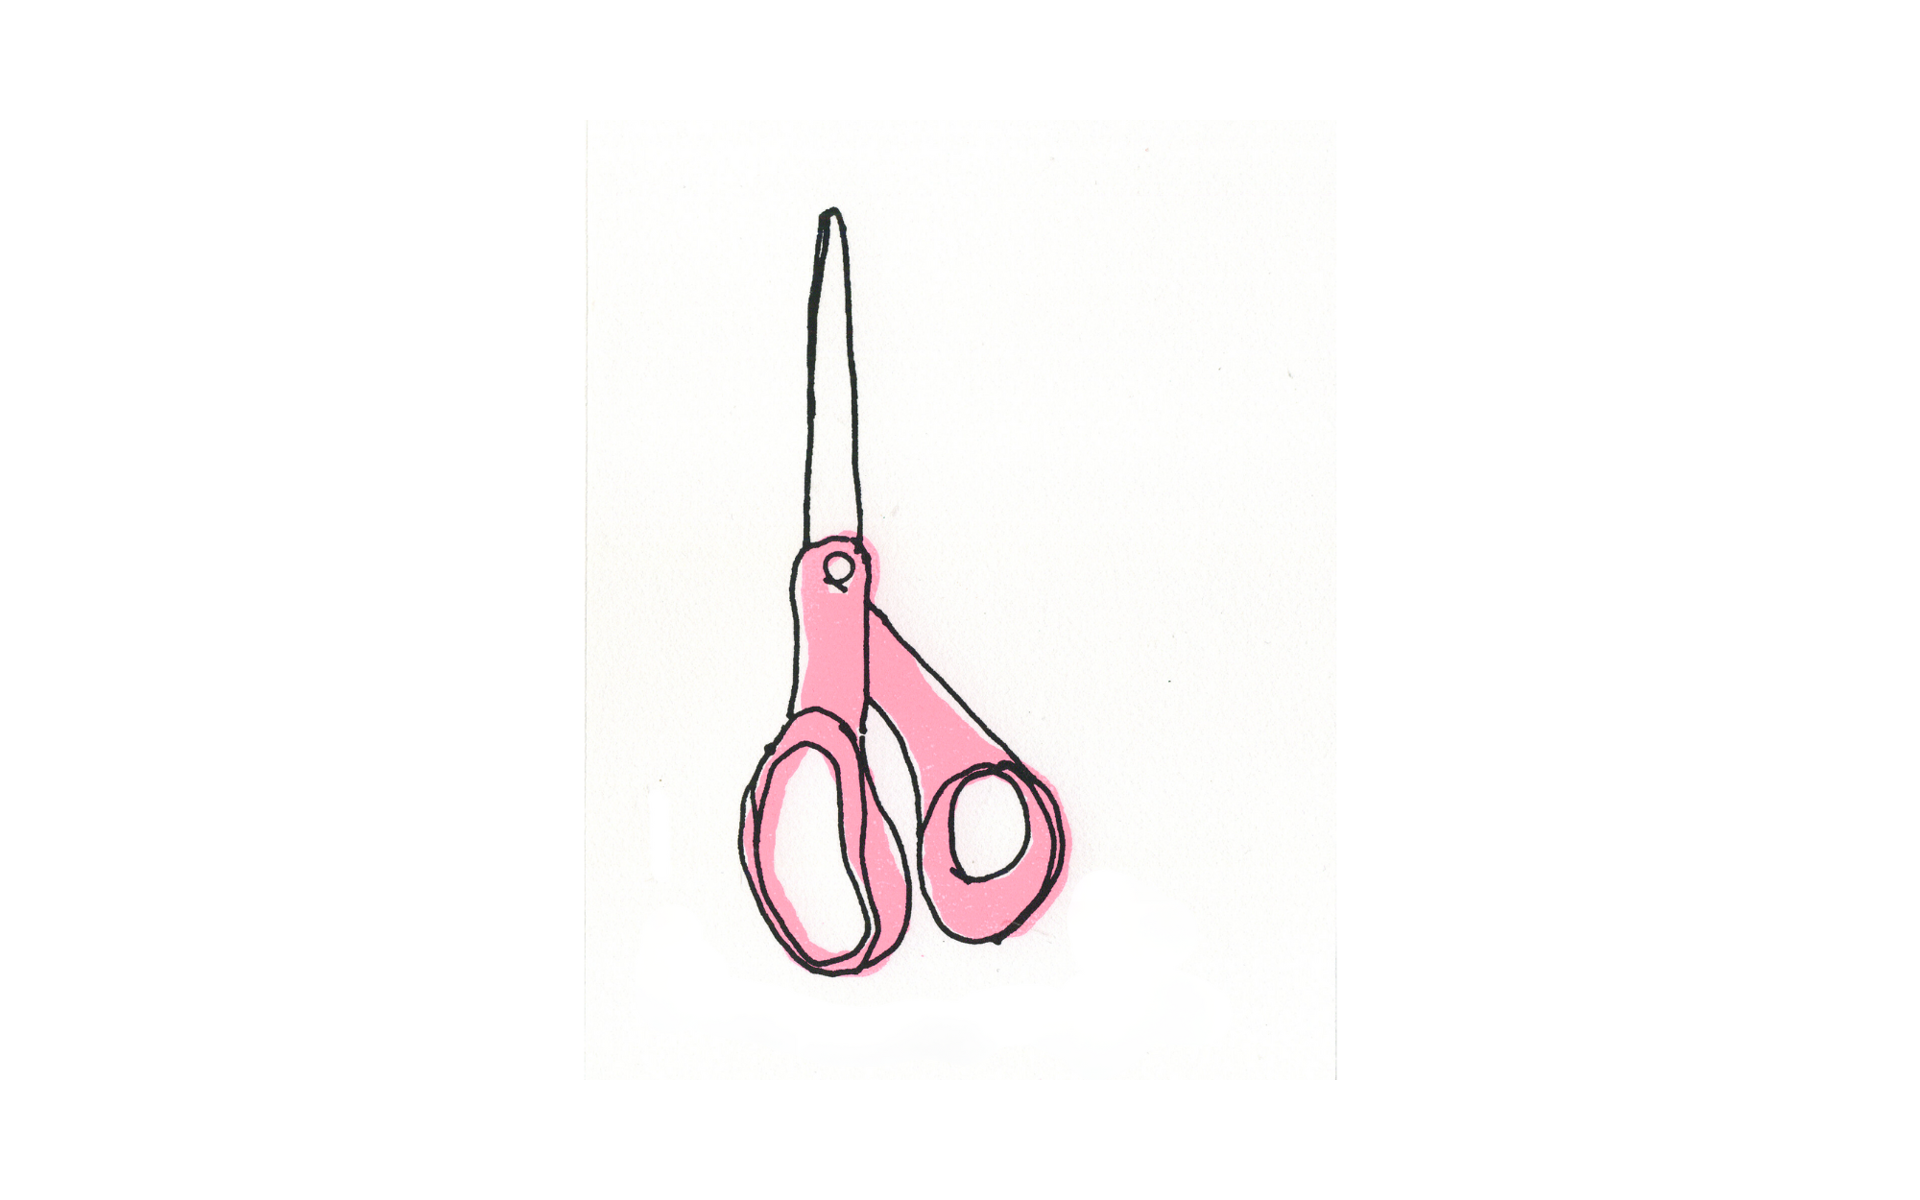 Big Scissors by ALANNA CAVANAGH